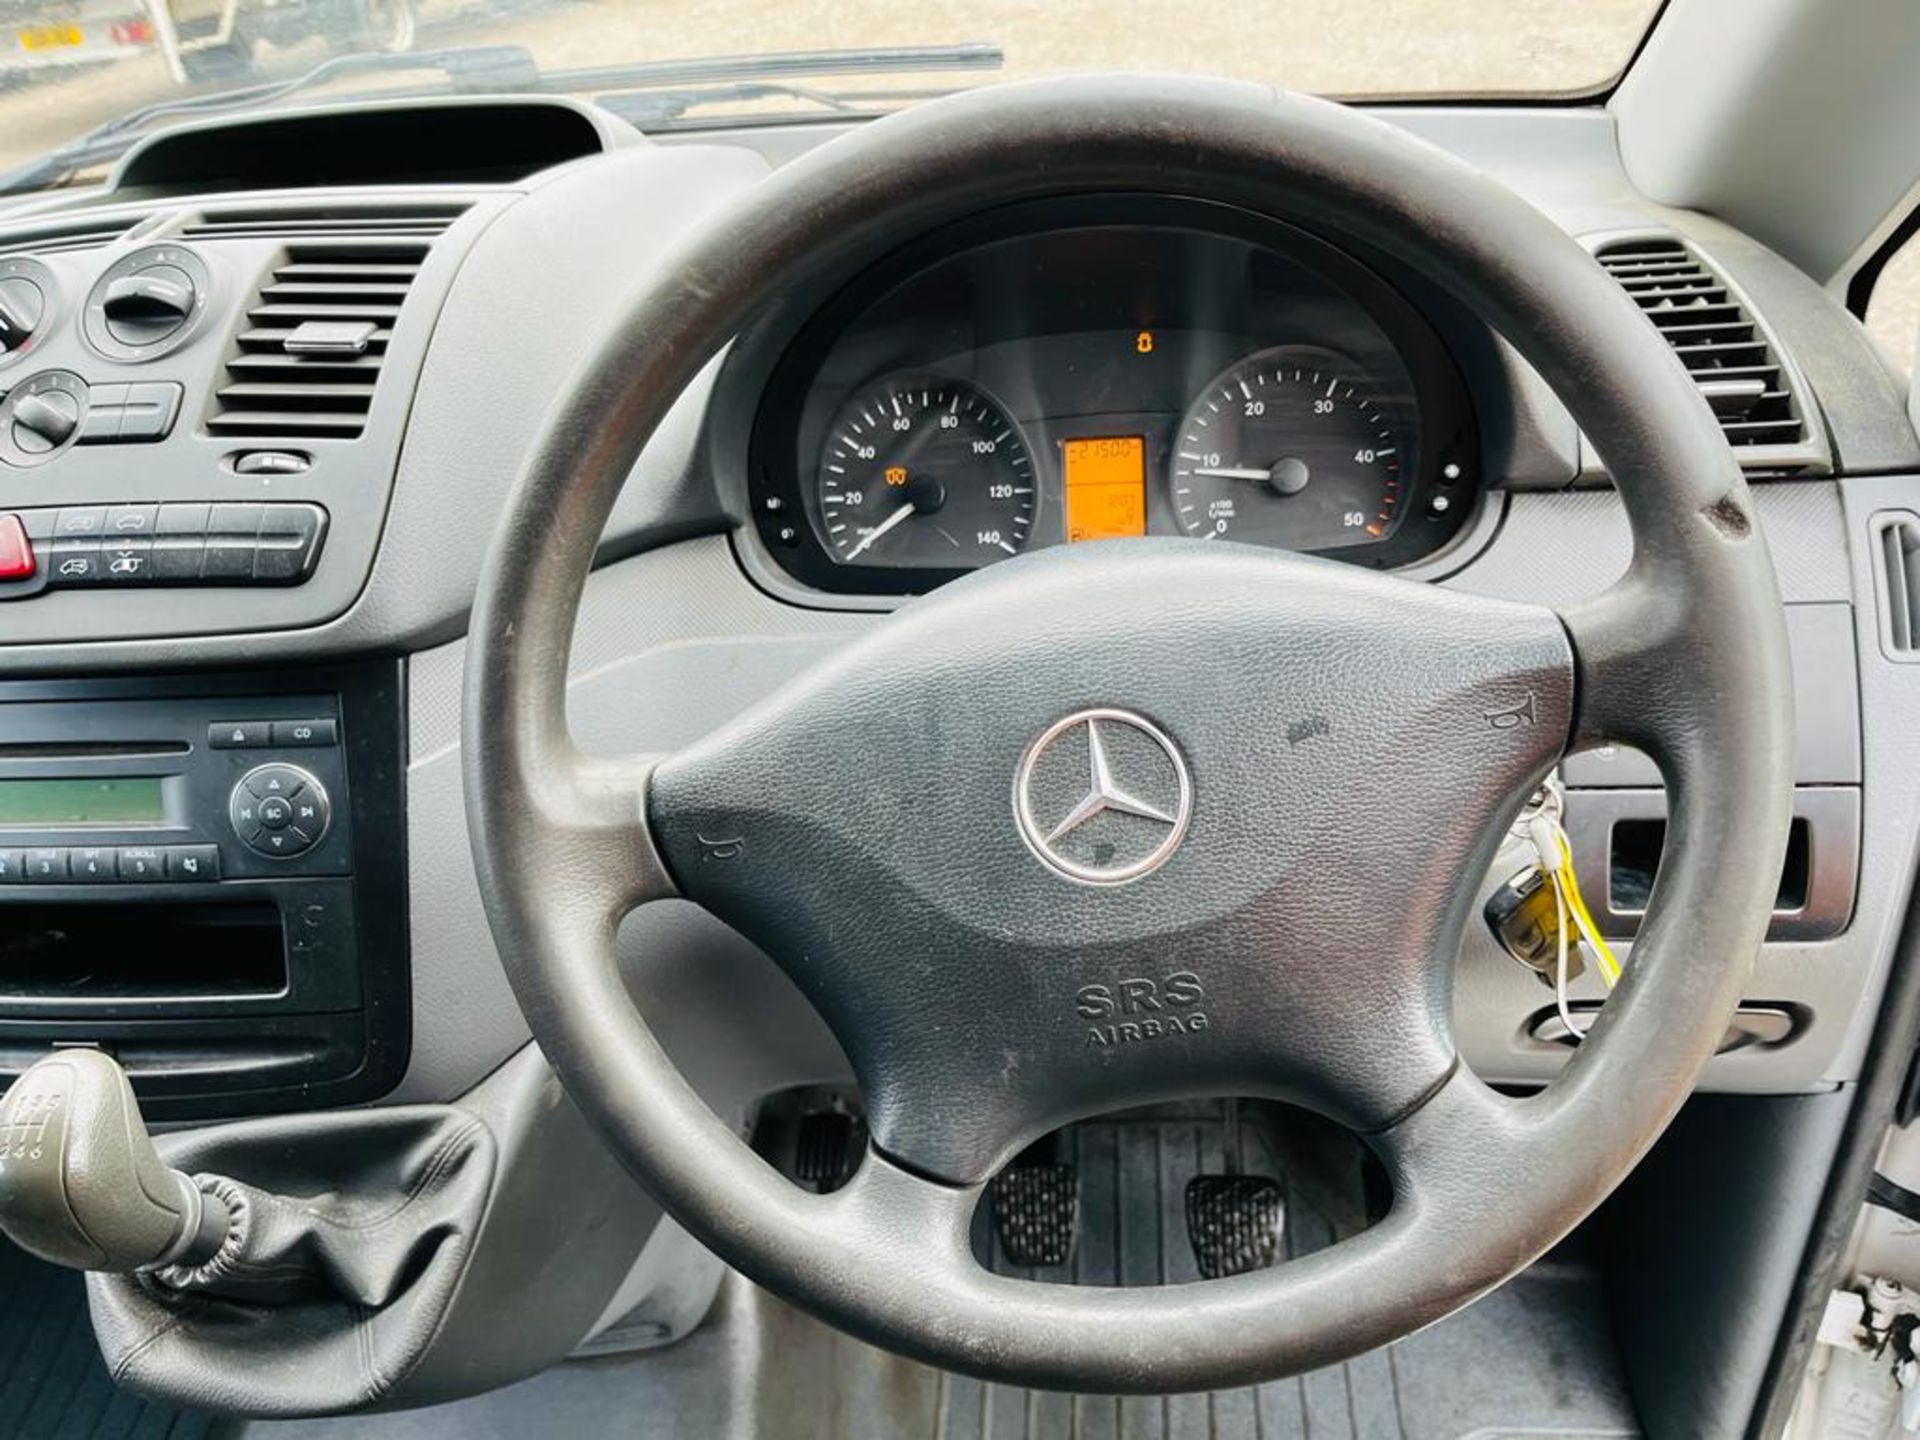 ** ON SALE ** Mercedes Benz Vito 2.1 109 CDI Long Wheel Base 2010 '59 Reg' - Panel Van - No Vat - Image 18 of 25